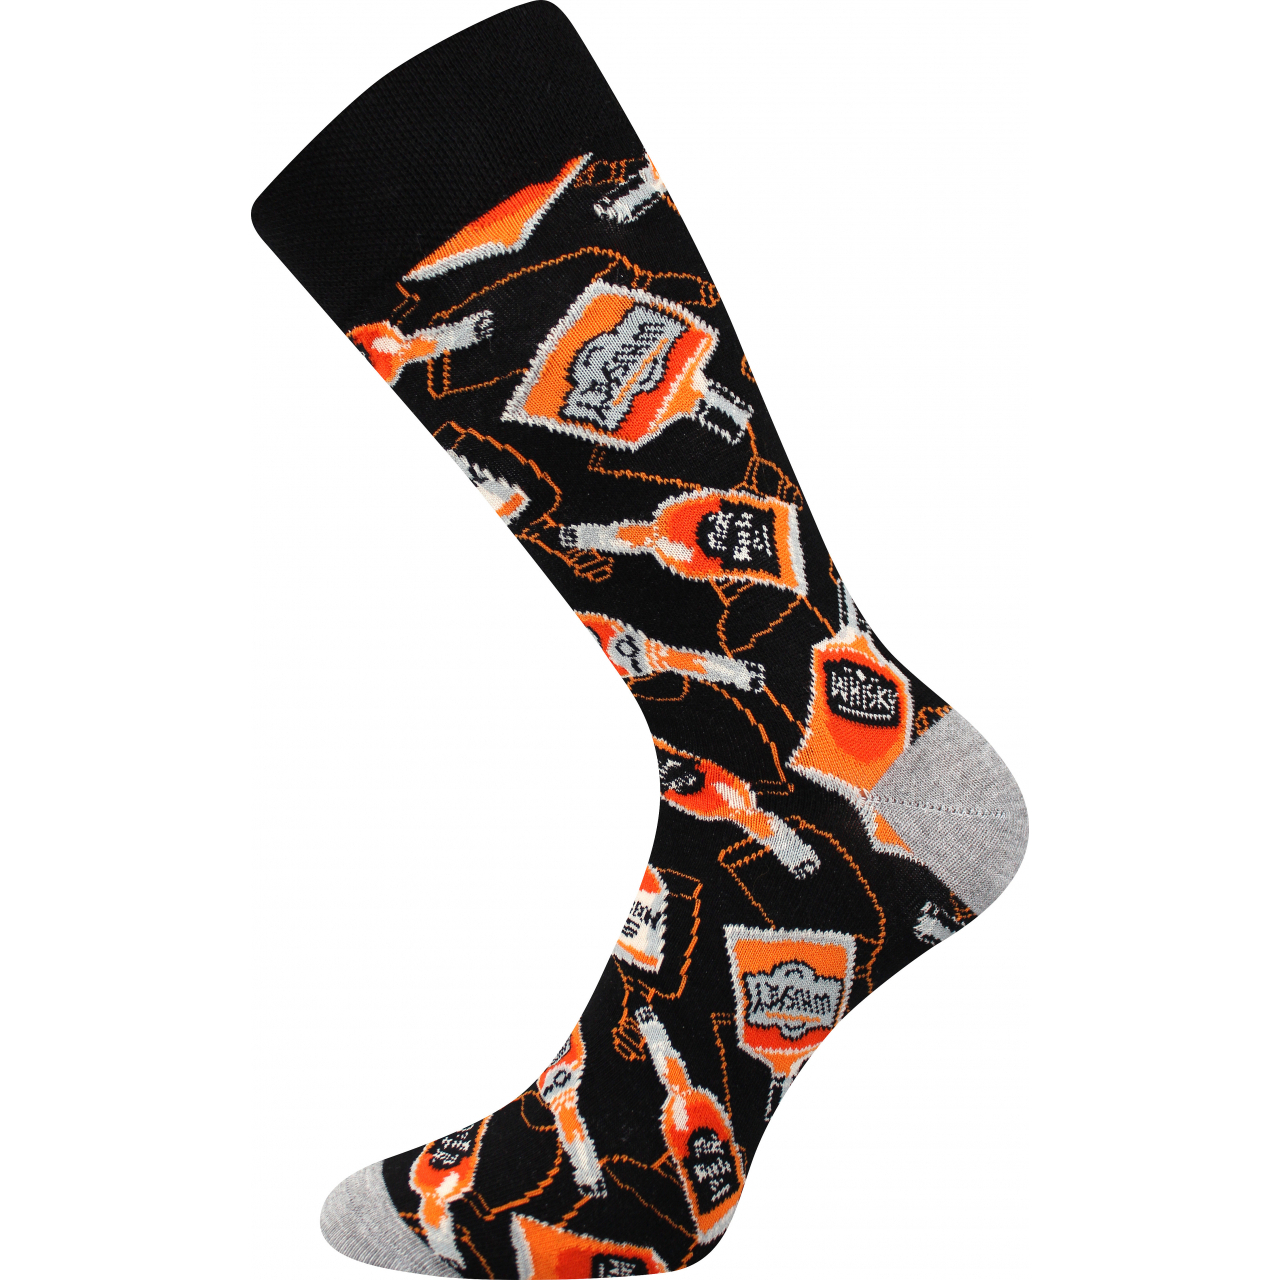 Ponožky trendy pánské Lonka Depate Kaktusy - černé-oranžové, 43-46